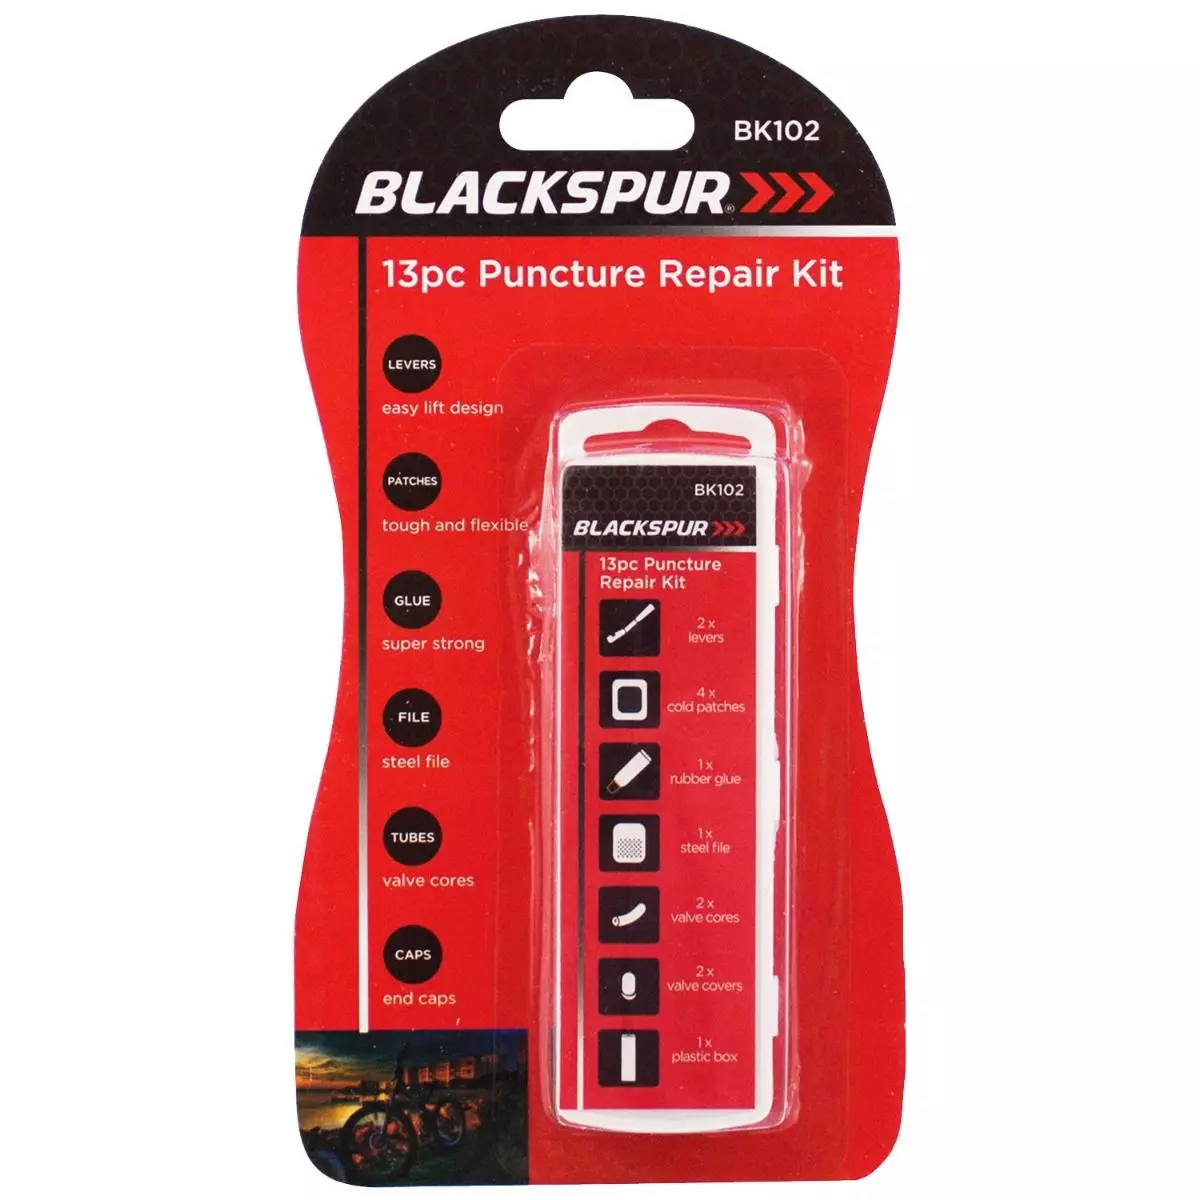 Blackspur Puncture Repair Kit 13pc